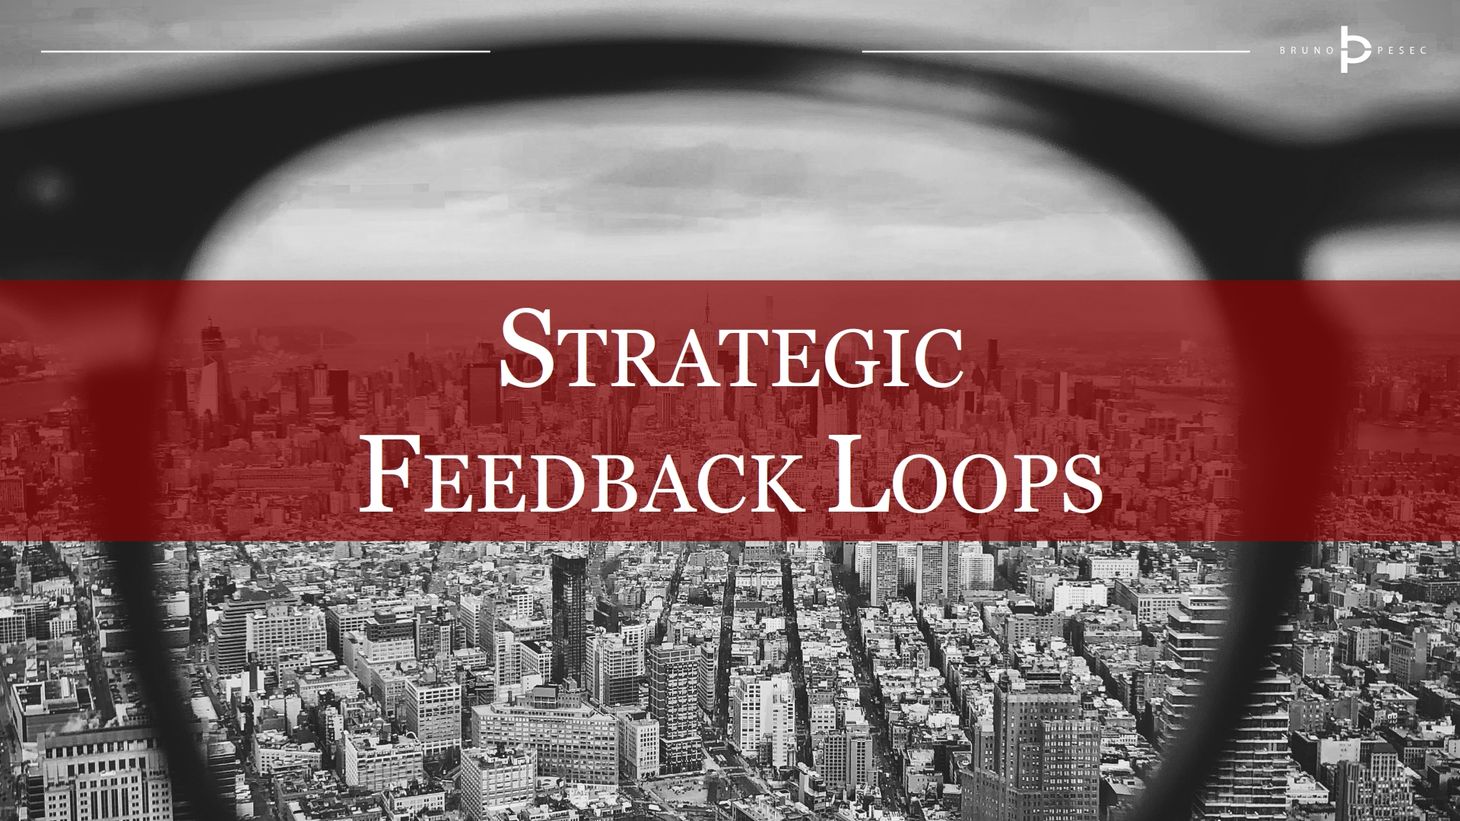 Strategic feedback loops